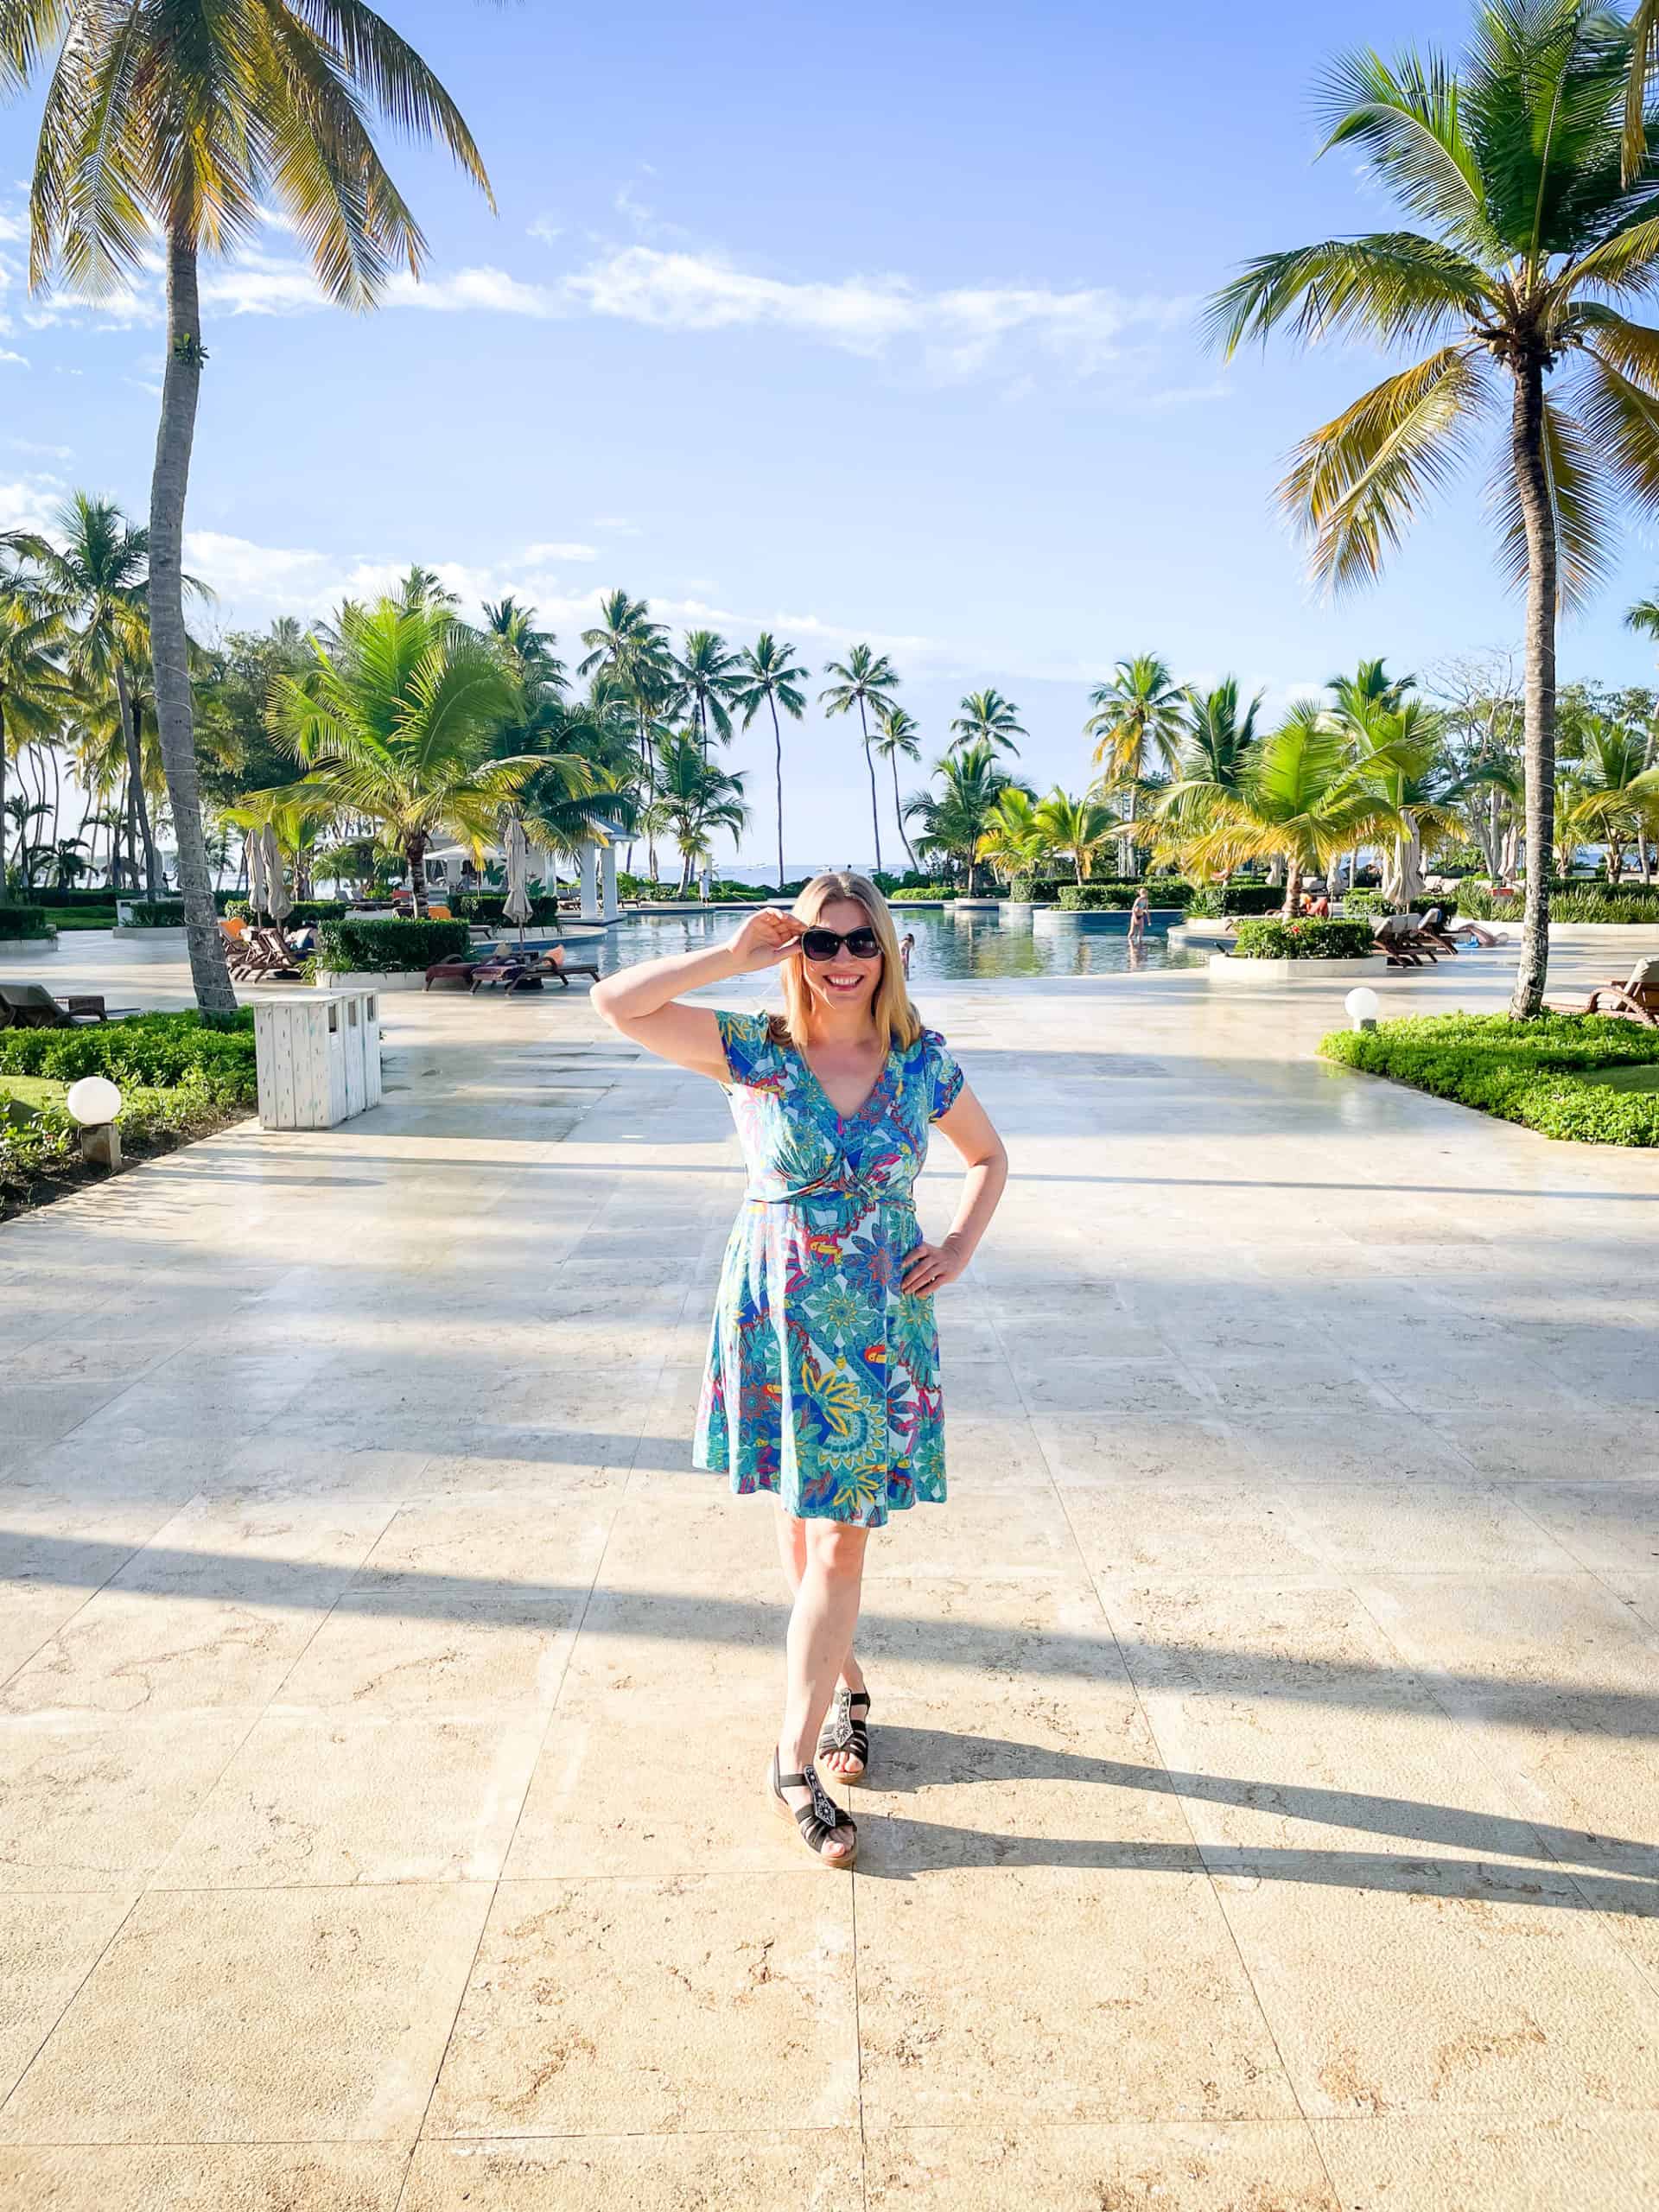 Dominican Republic - Hilton La Romana - Abigail King by main pool with palm trees